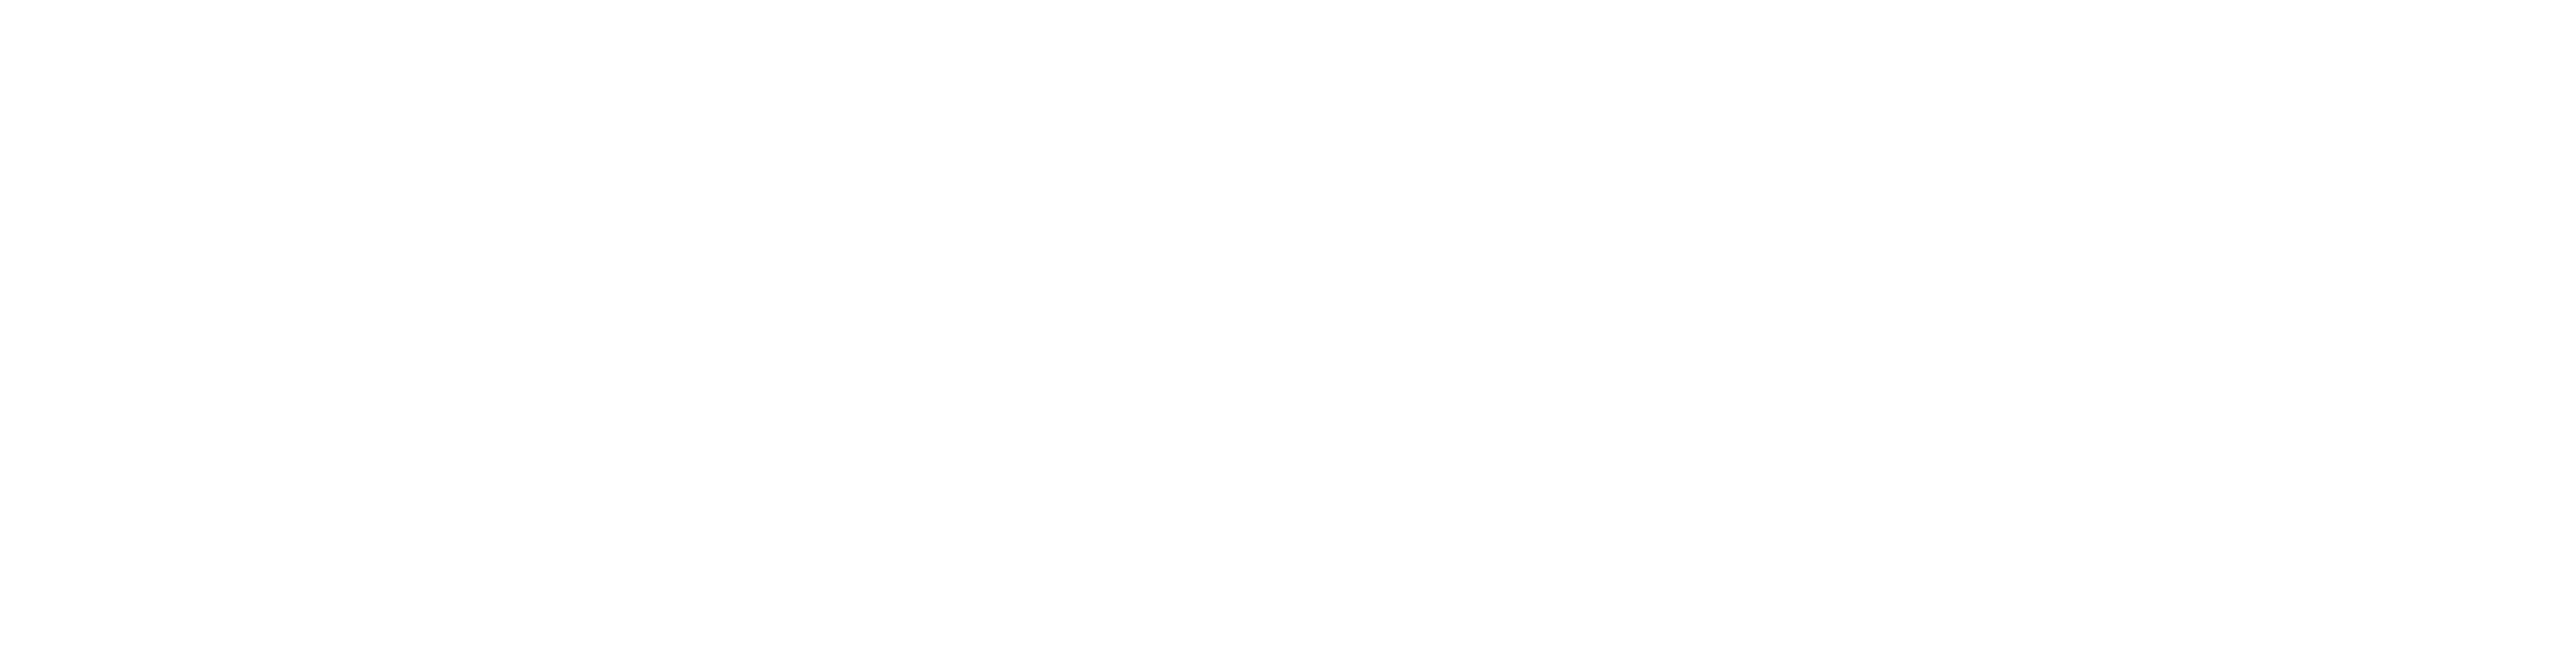 Digital lending platform FlexiLoans raises $90 million